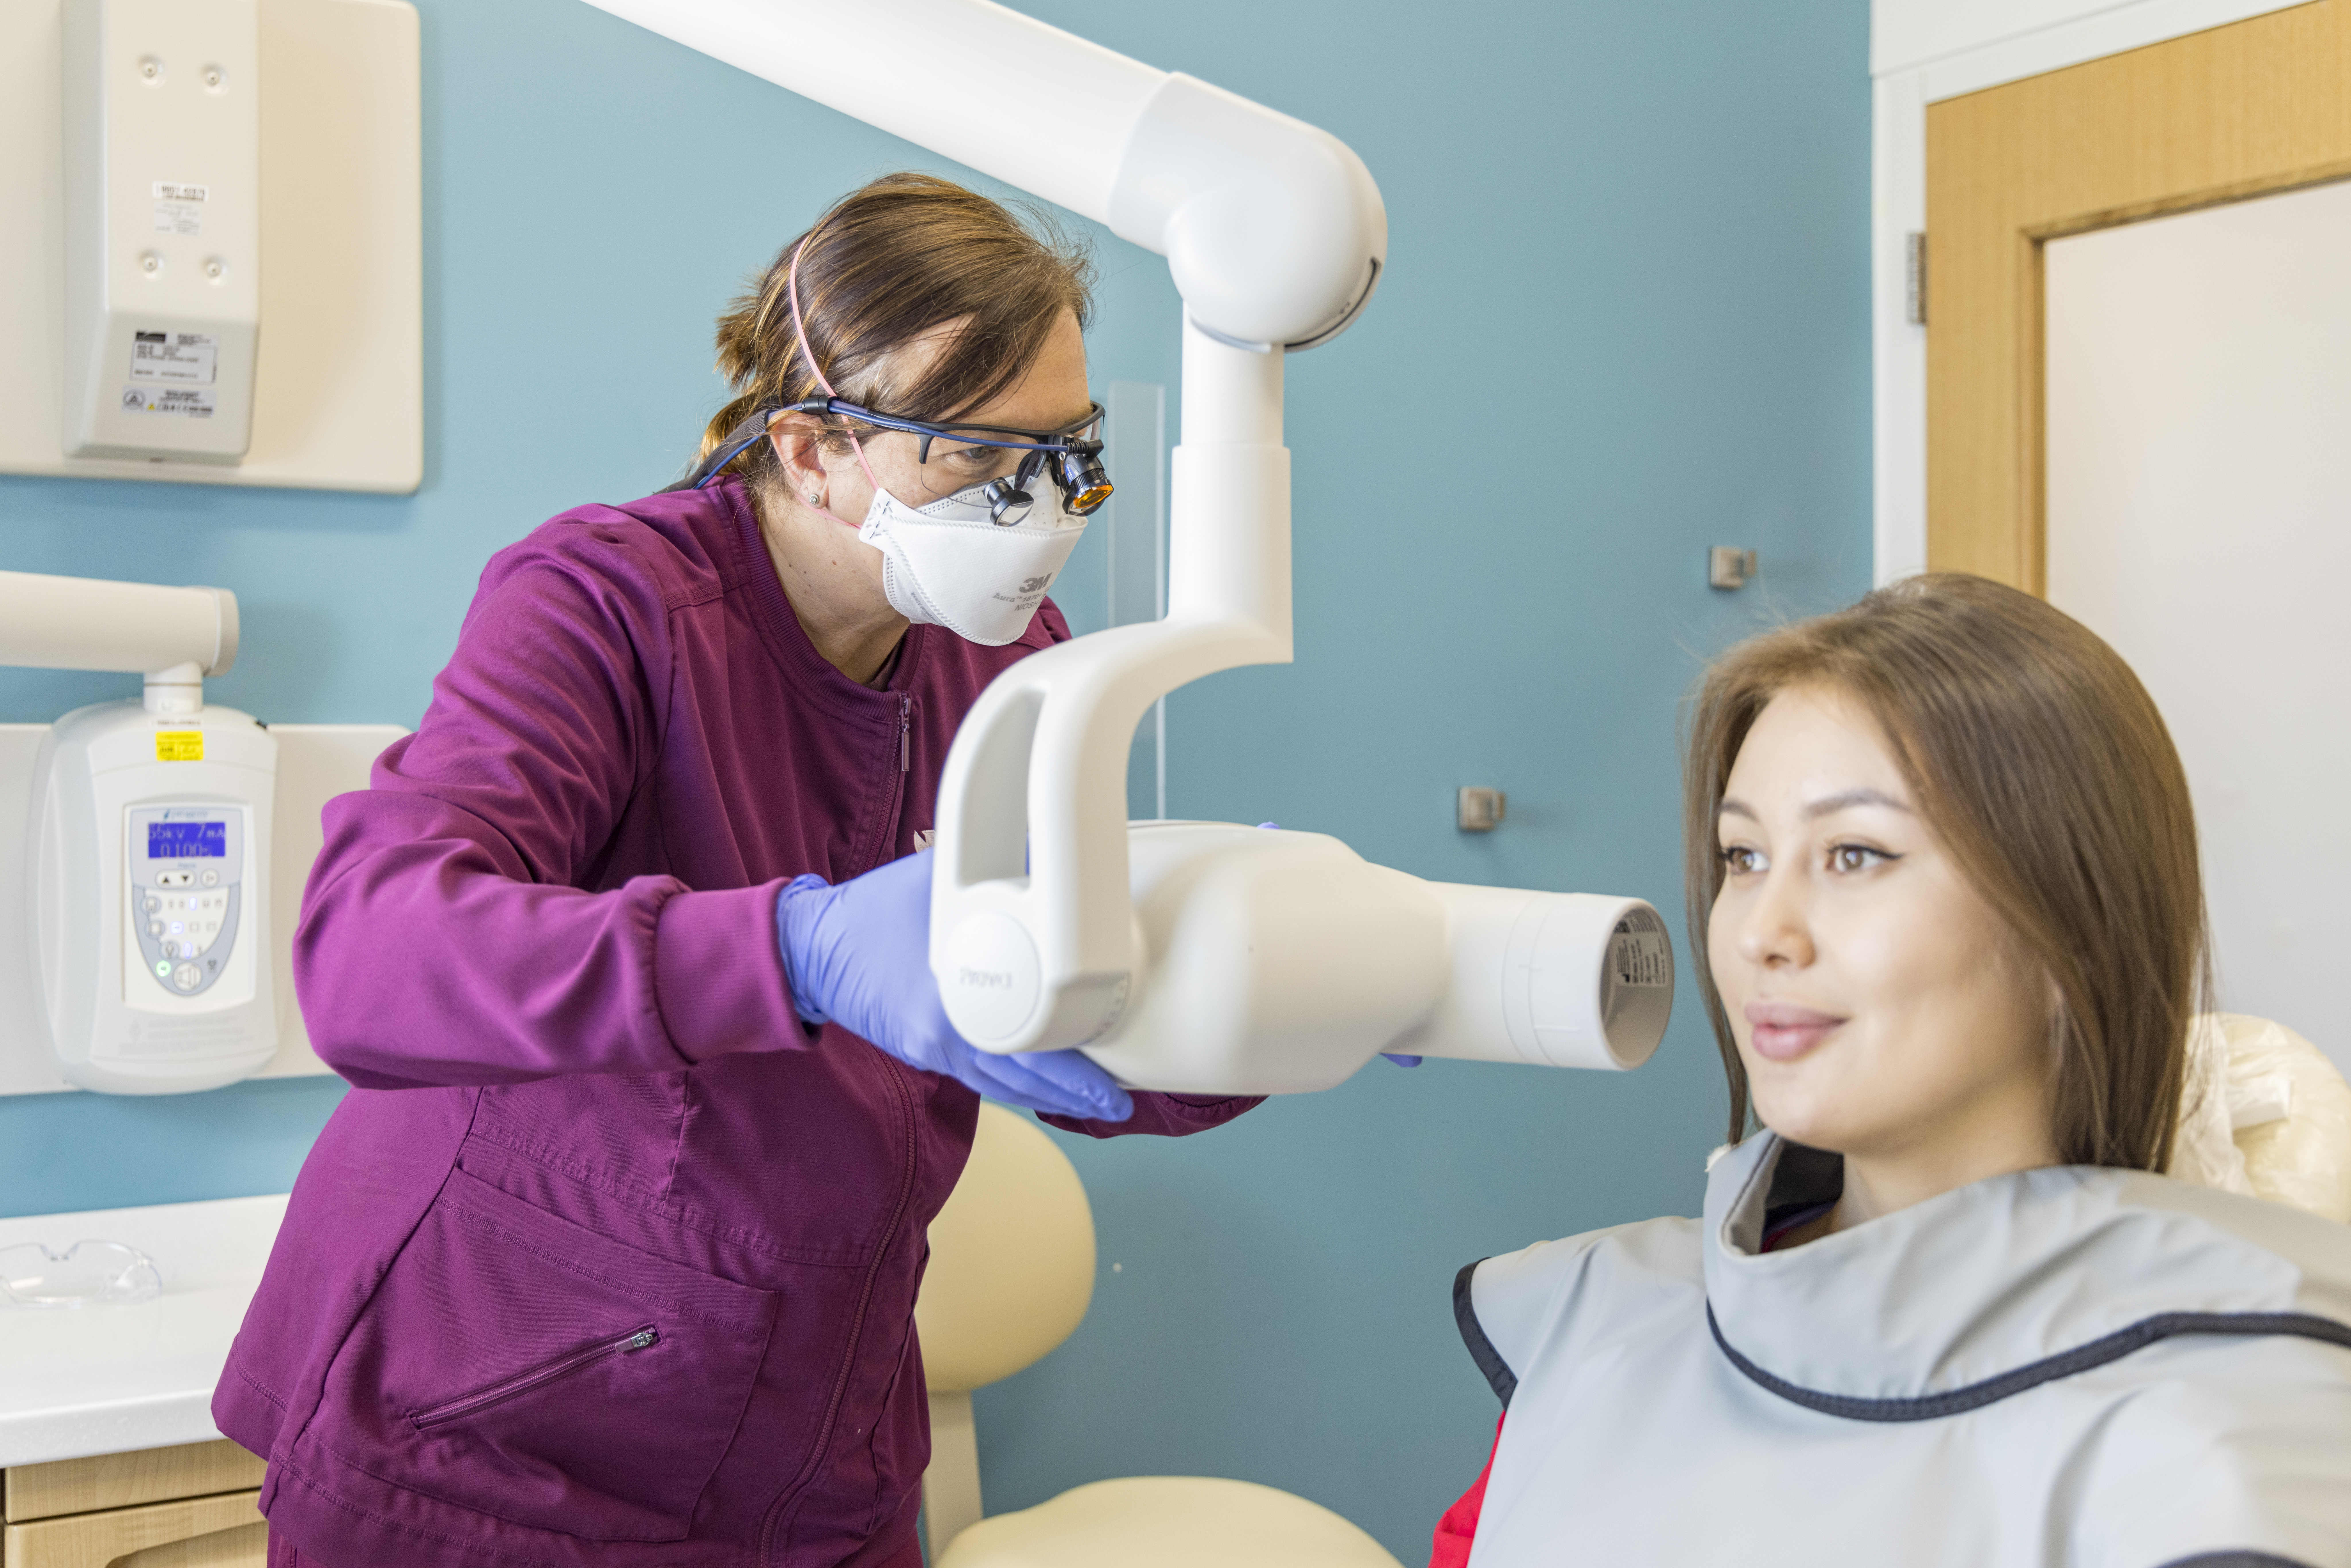 Dental hygienist in purple scrubs takes x-rays of patient's teeth